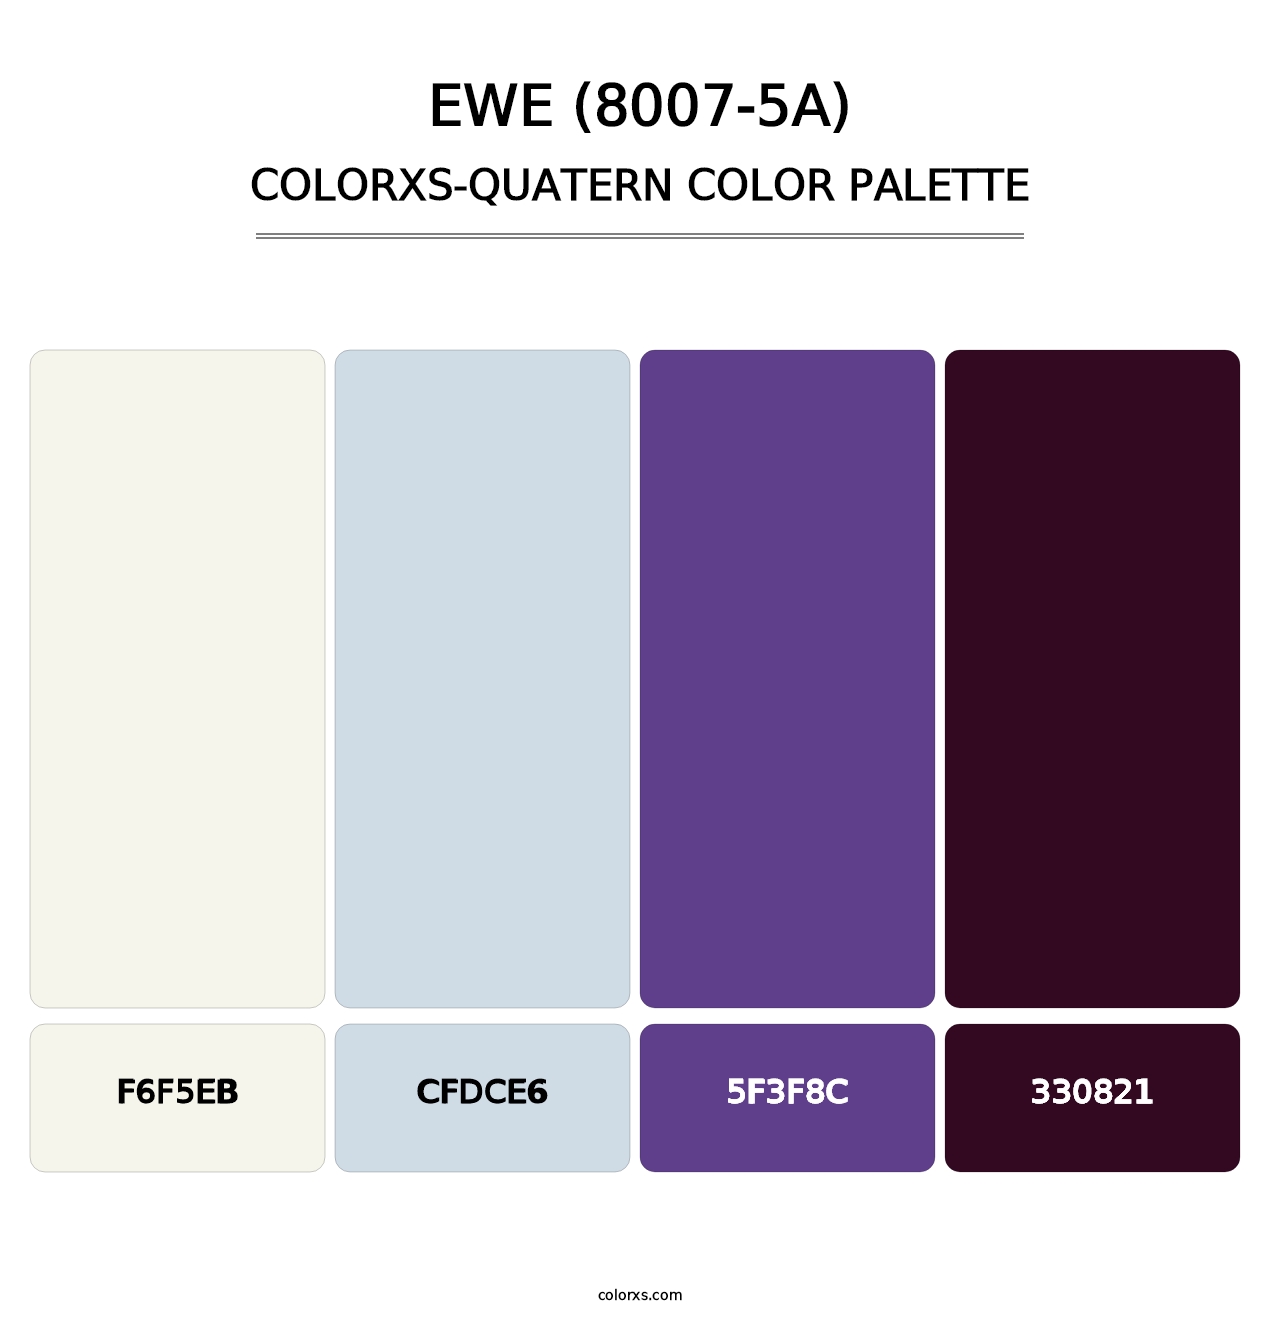 Ewe (8007-5A) - Colorxs Quatern Palette